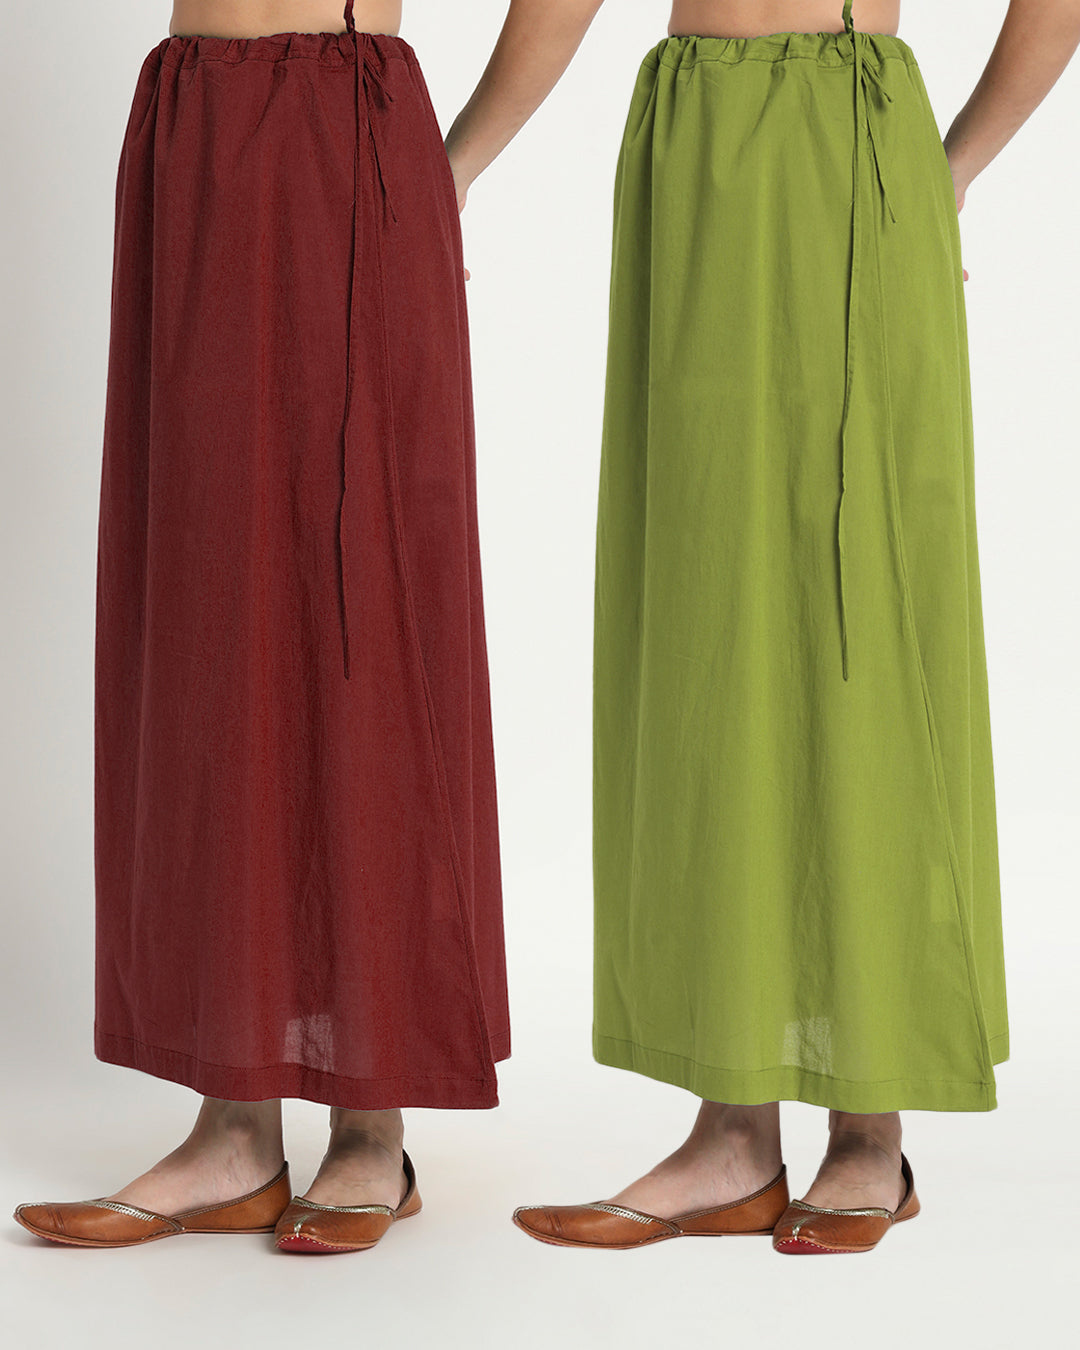 Combo: Russet Red & Sage Green Peekaboo Petticoat- Set of 2